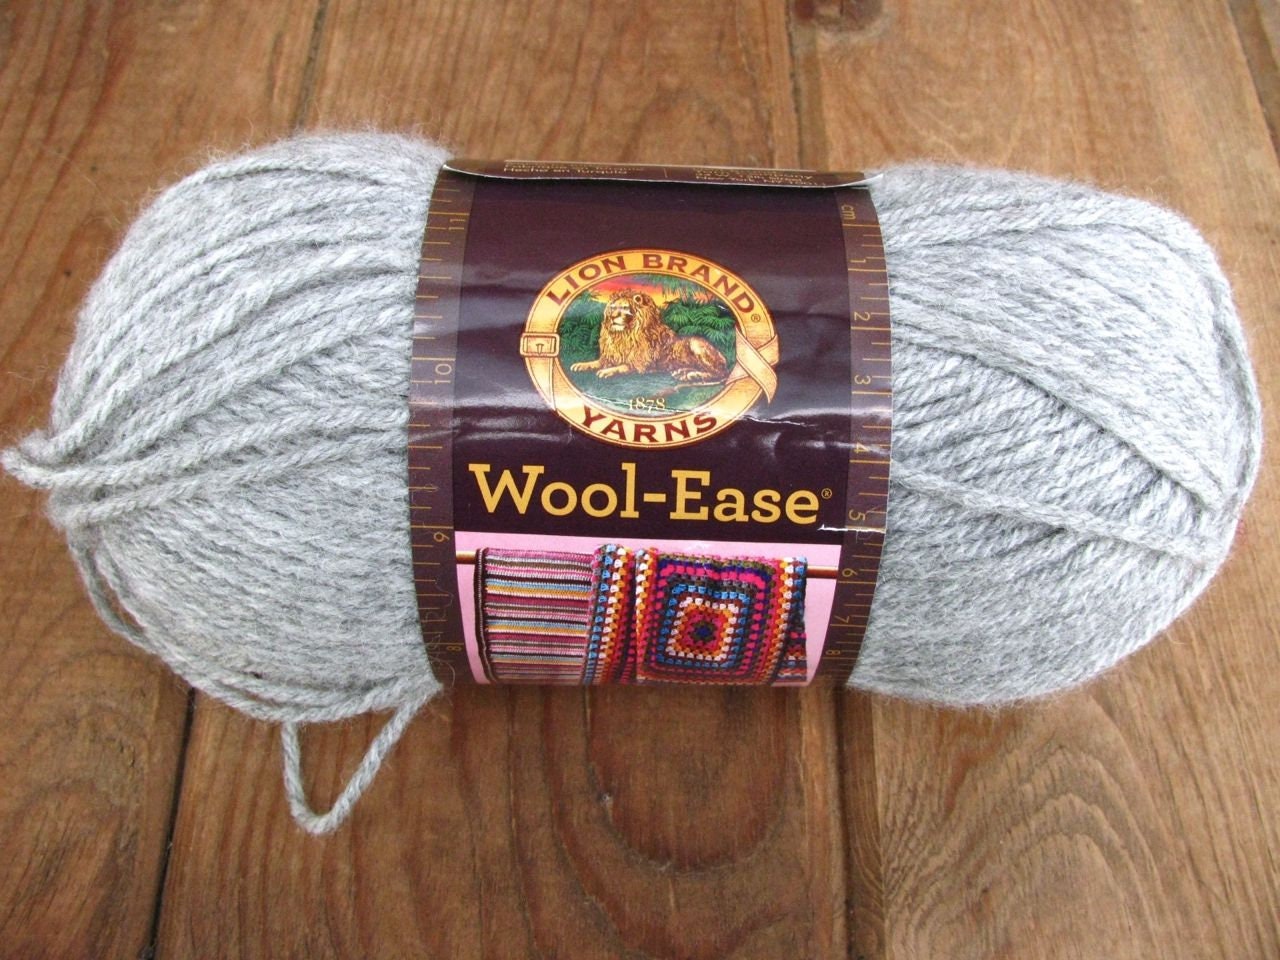 Wool Ease Yarn, Bonus Bundle, 212 Yards, Lion Brand Yarn, Color Grey  Marble, Wool Ease Think and Quick Yarn, US Seller, Gray Marble 